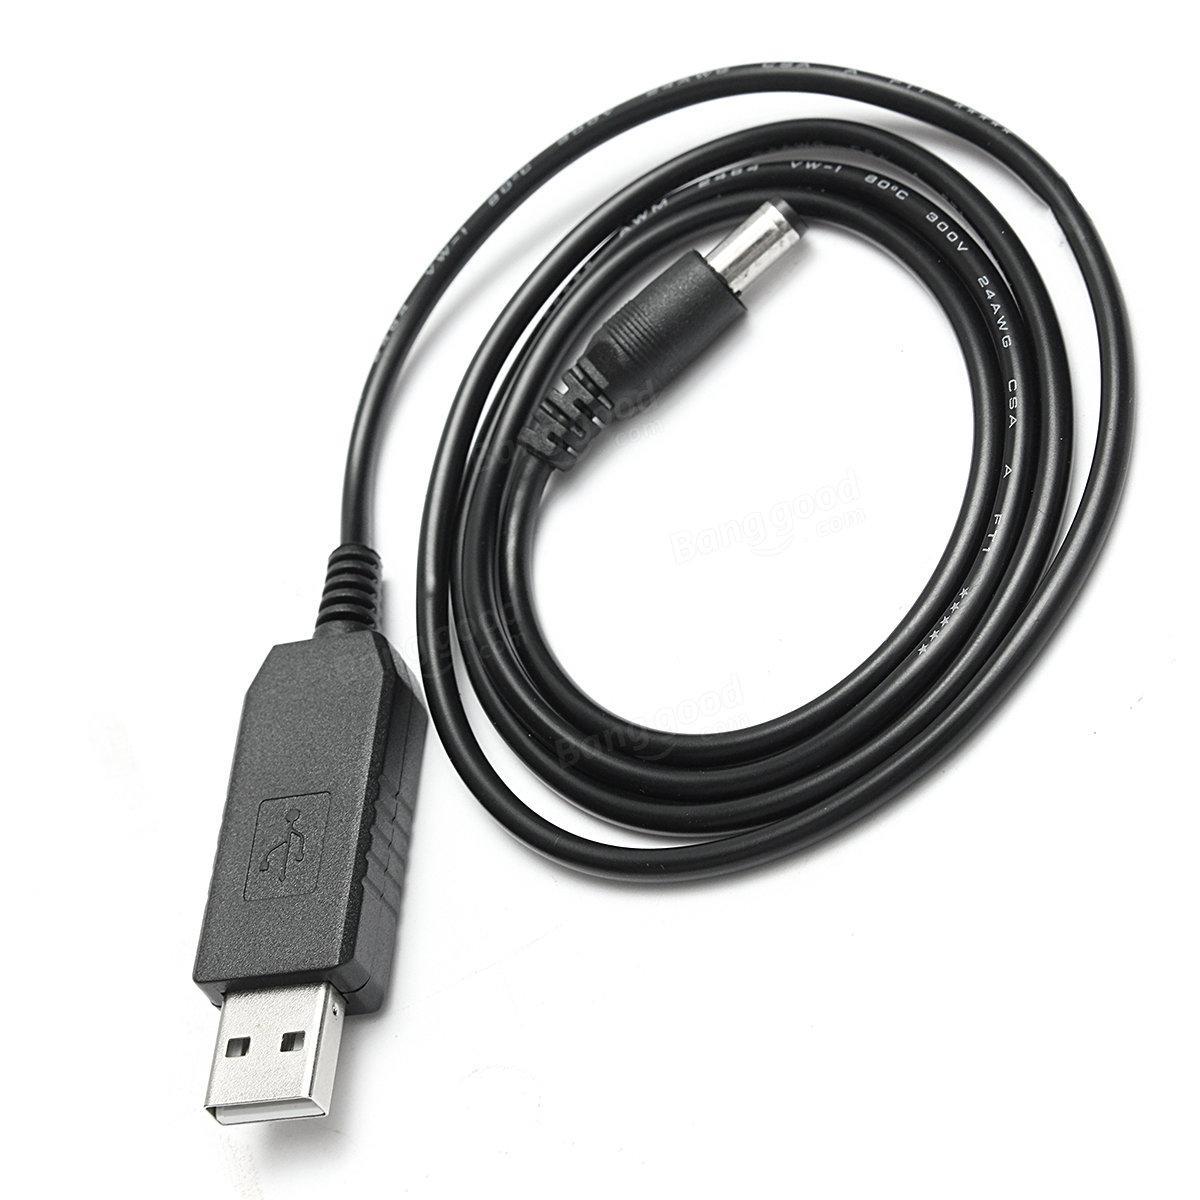 USB Charger Cable for BAOFENG UV-5R UV-5RA UV-5RB UV-5RE TYT Radio